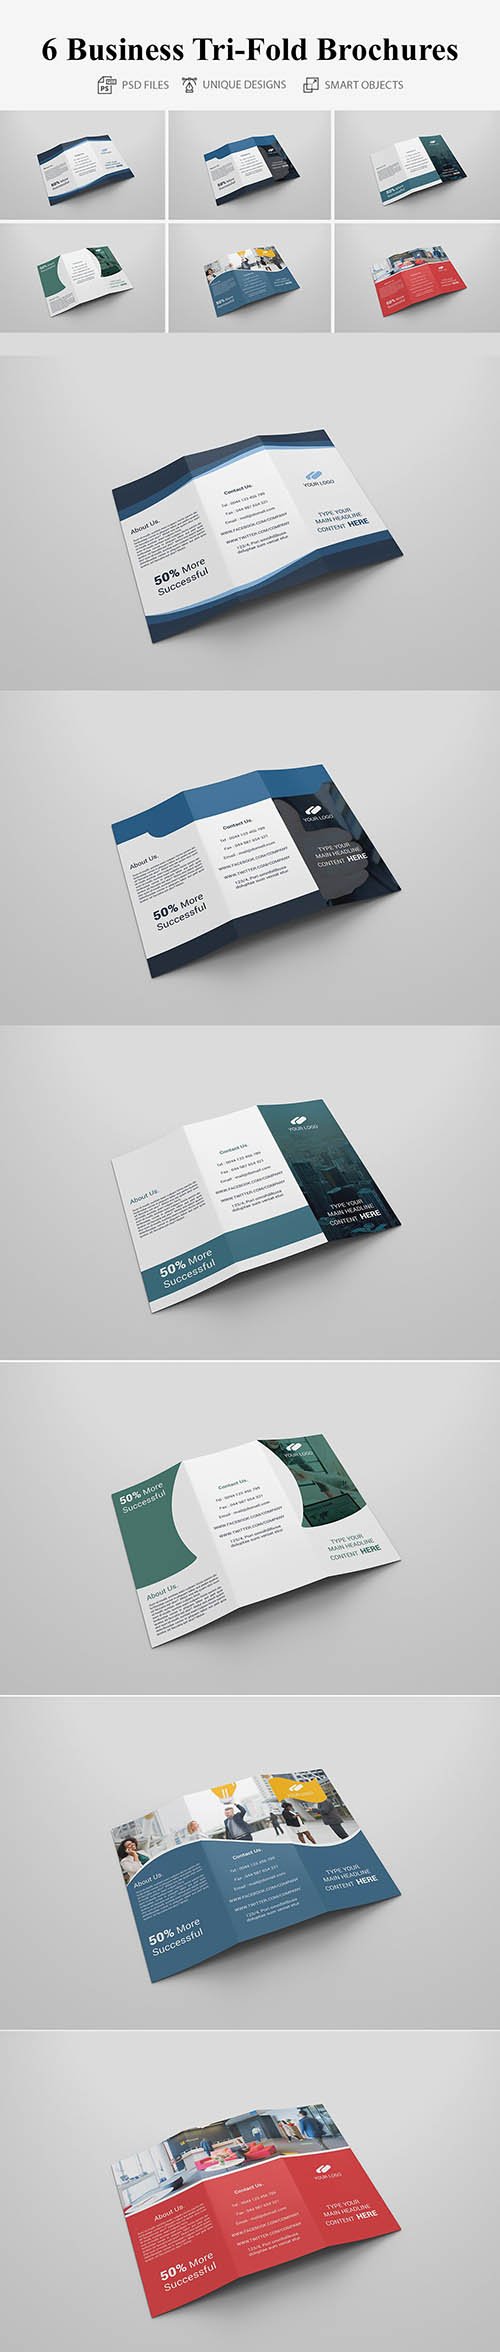 CreativeMarket - 6 Business Tri-fold Brochures - 4160628